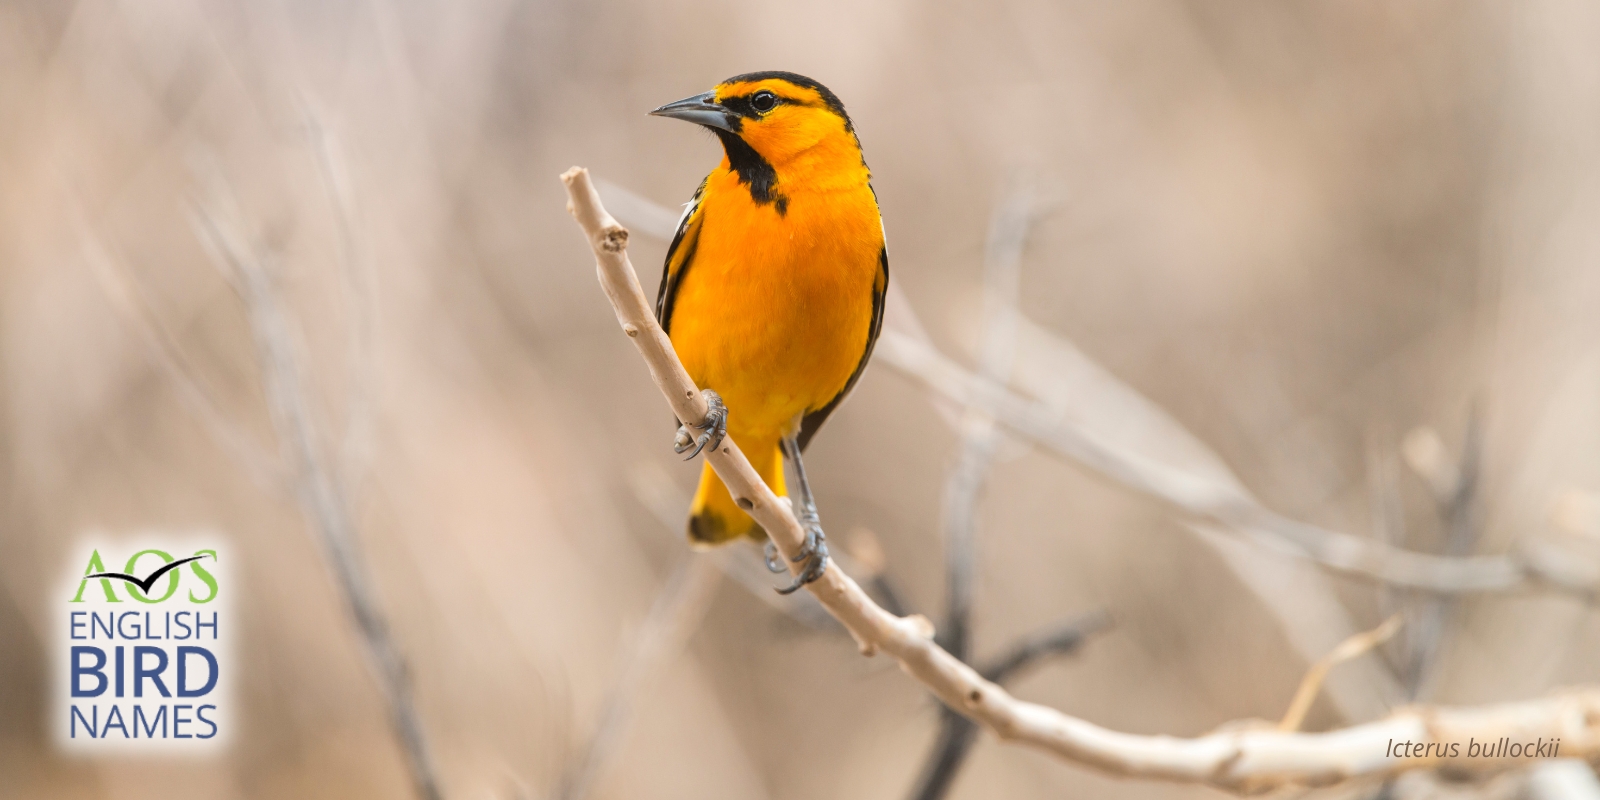 English Bird Names Archive - American Ornithological Society